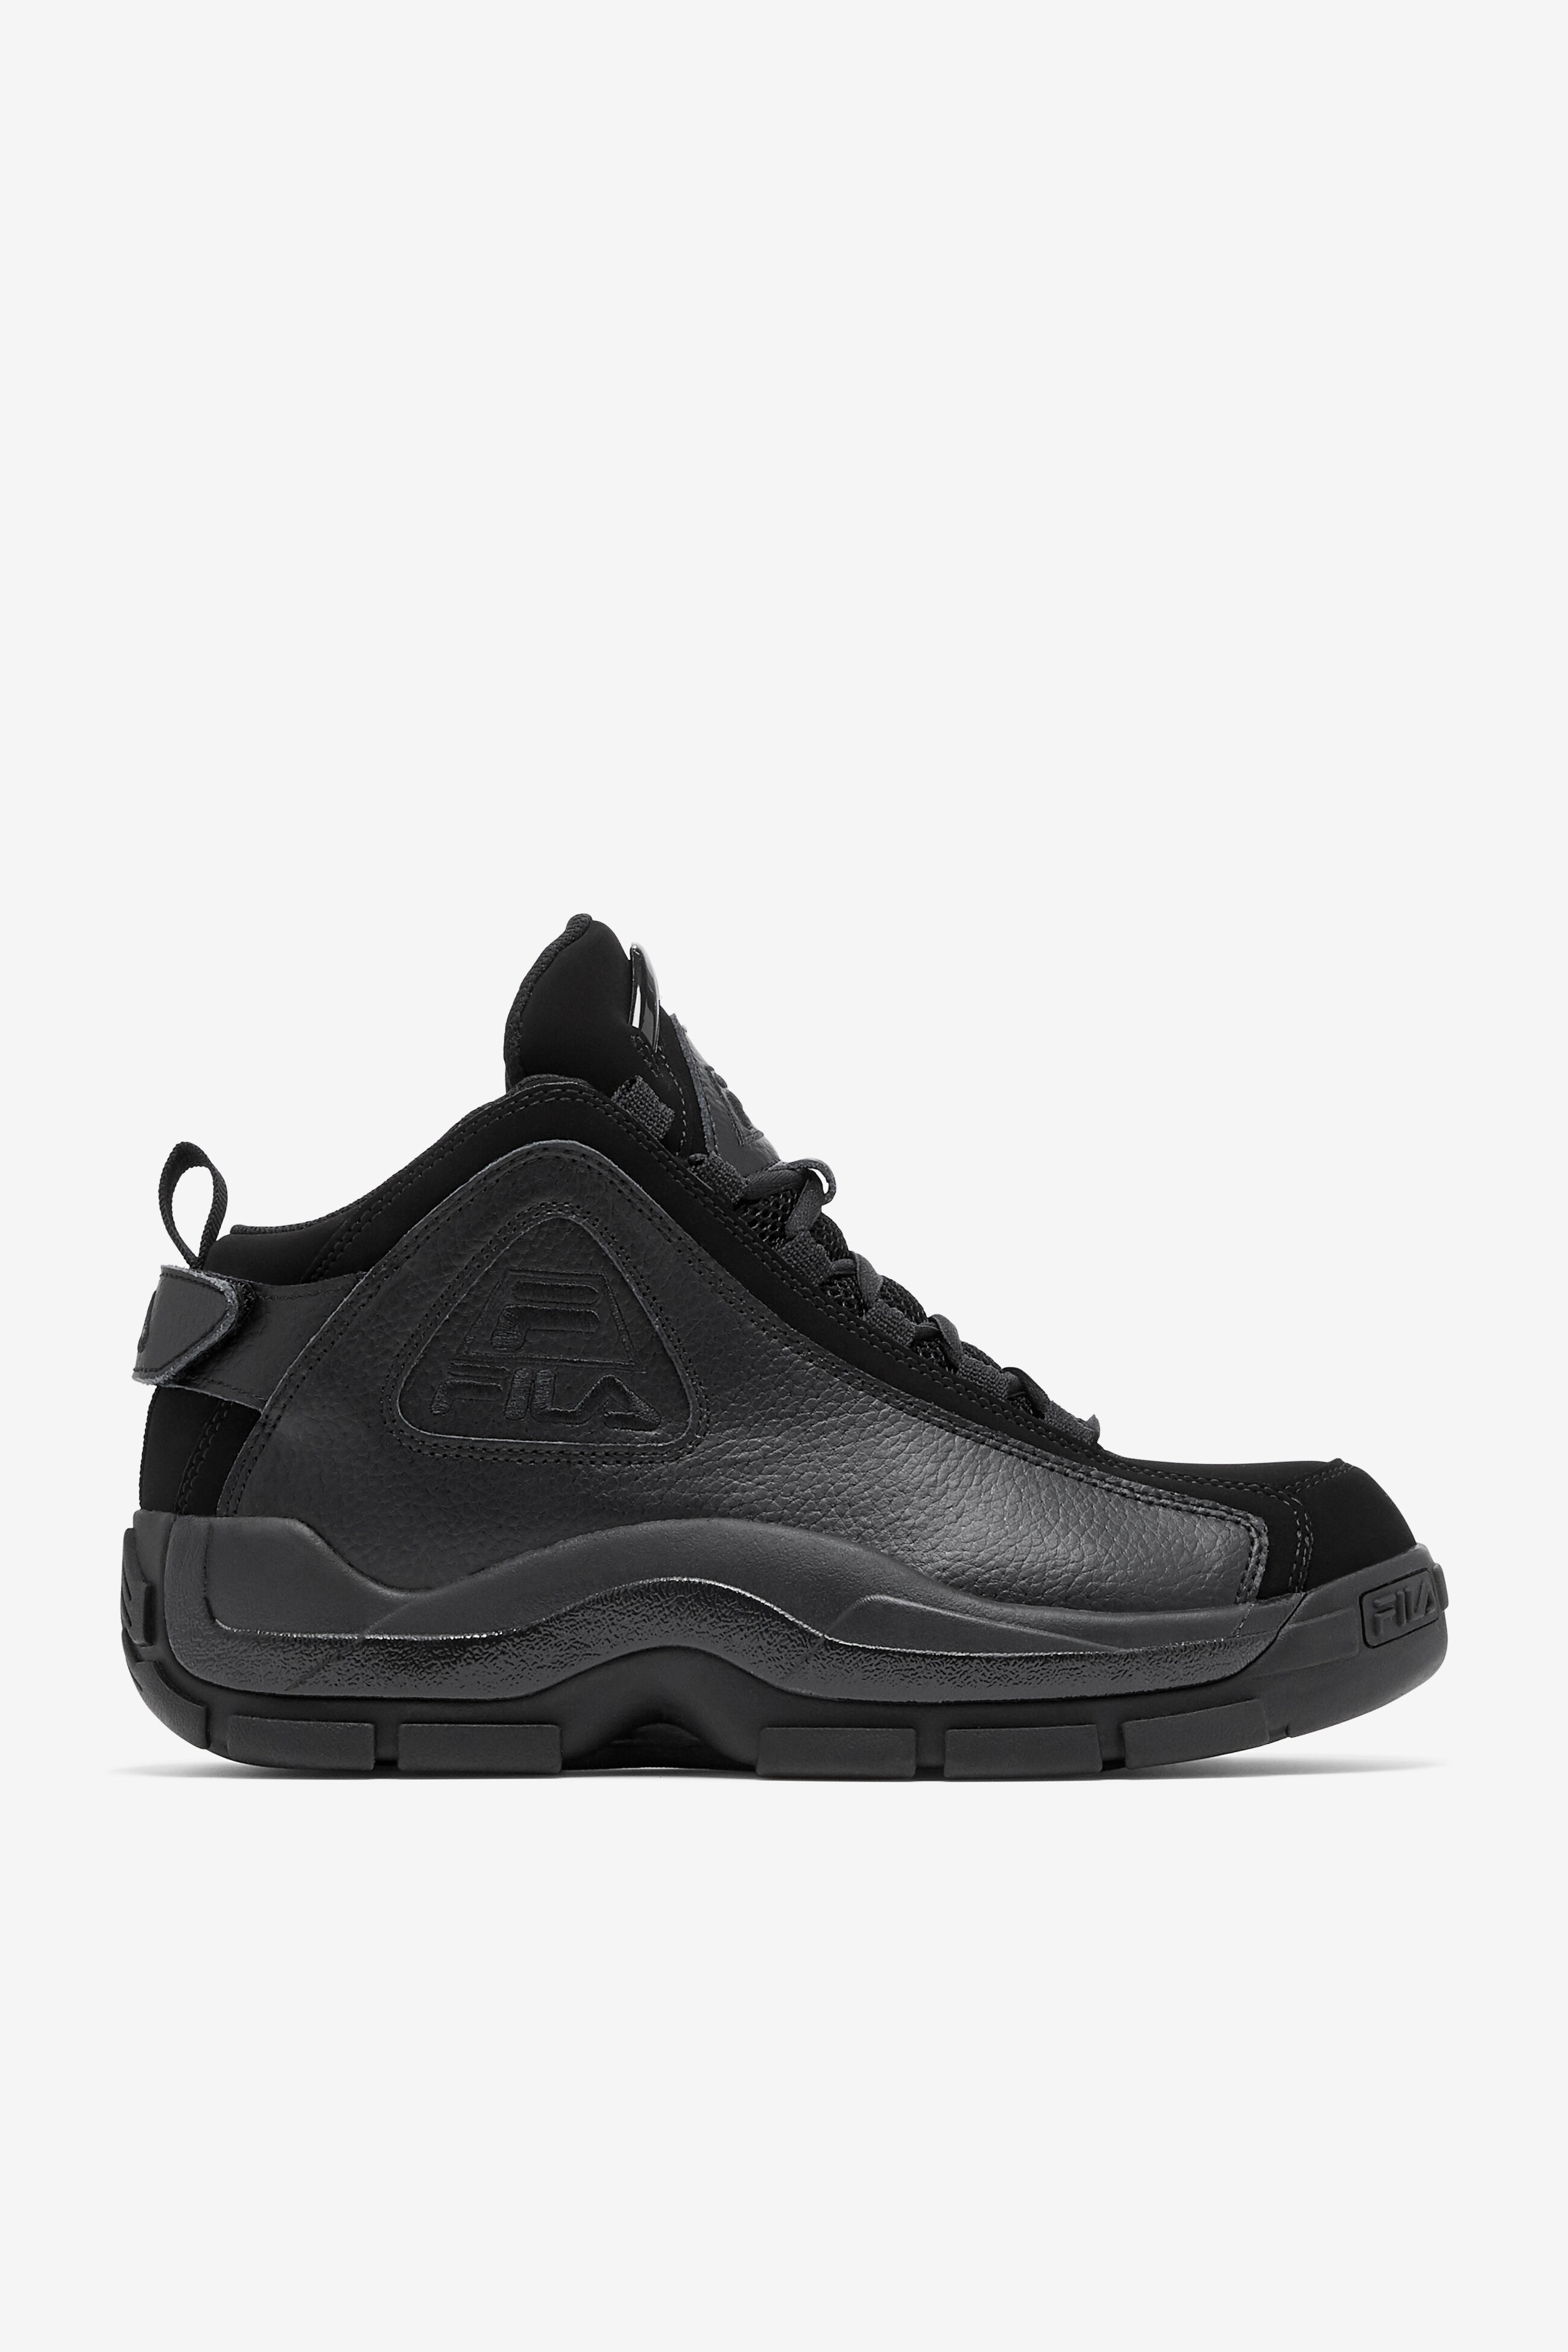 Grant Hill 2 All Black Basketball Shoes | Fila 1BM01357